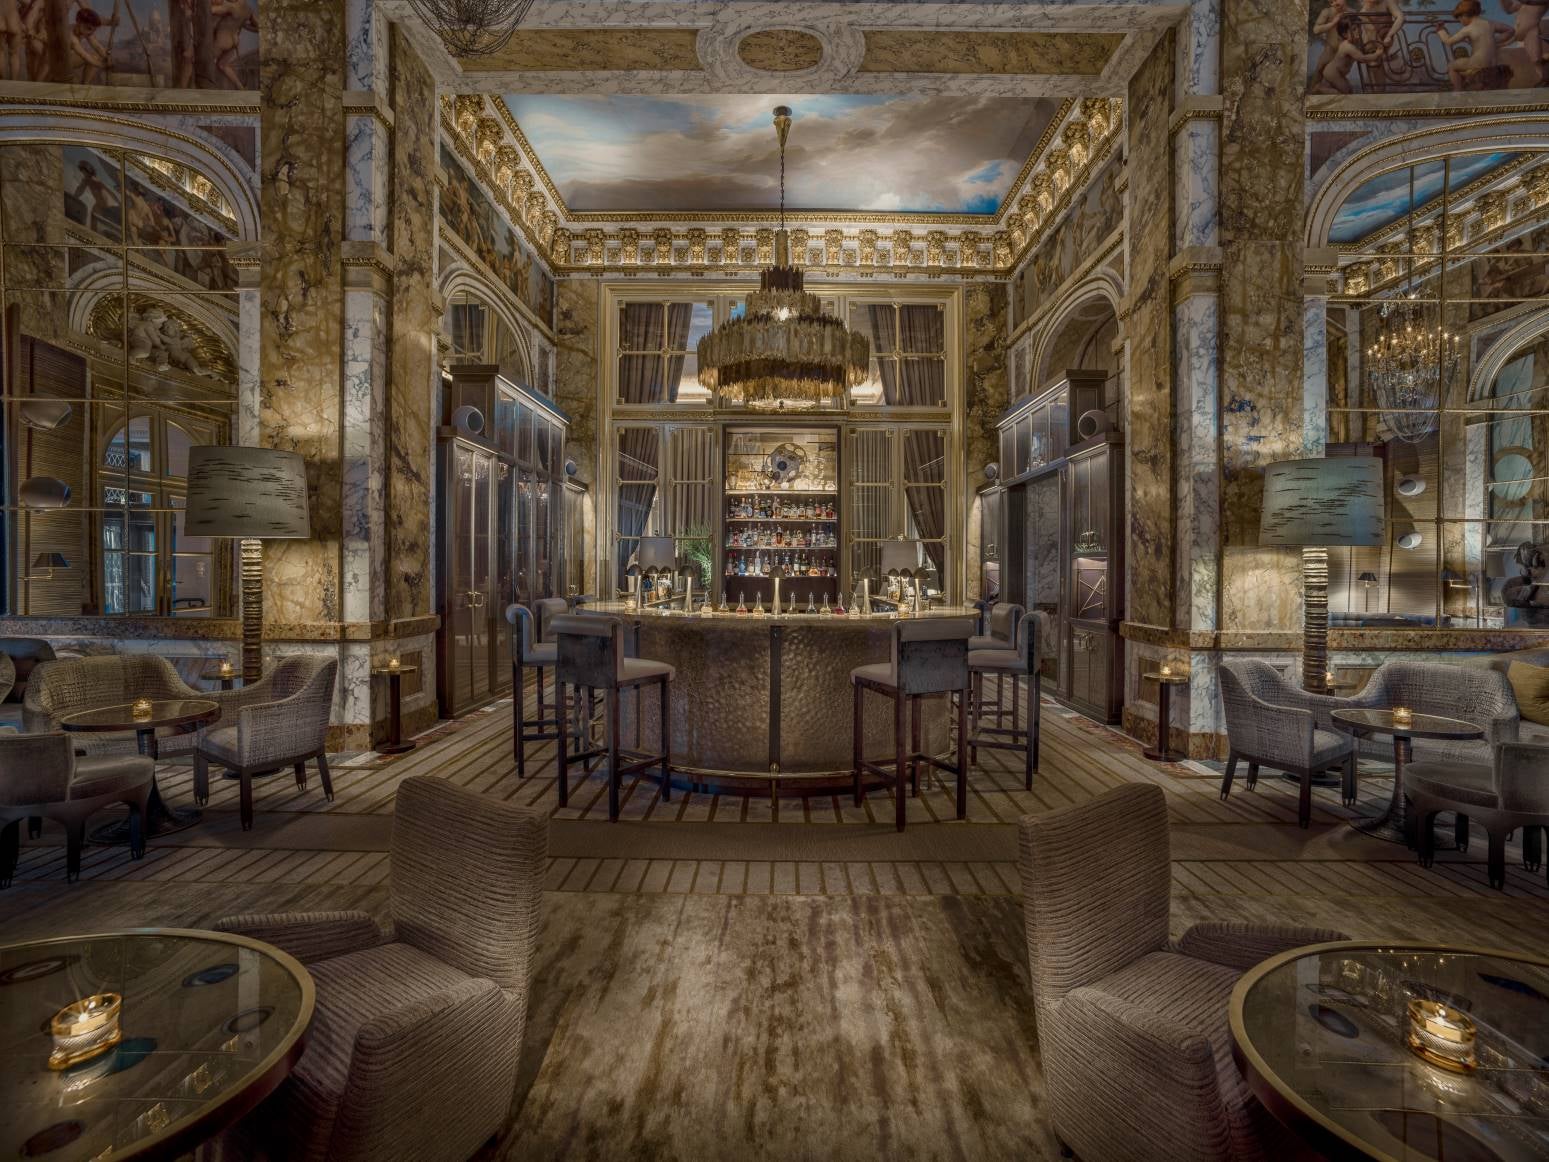 Image showing the elegant bar at Hôtel de Crillon in Paris